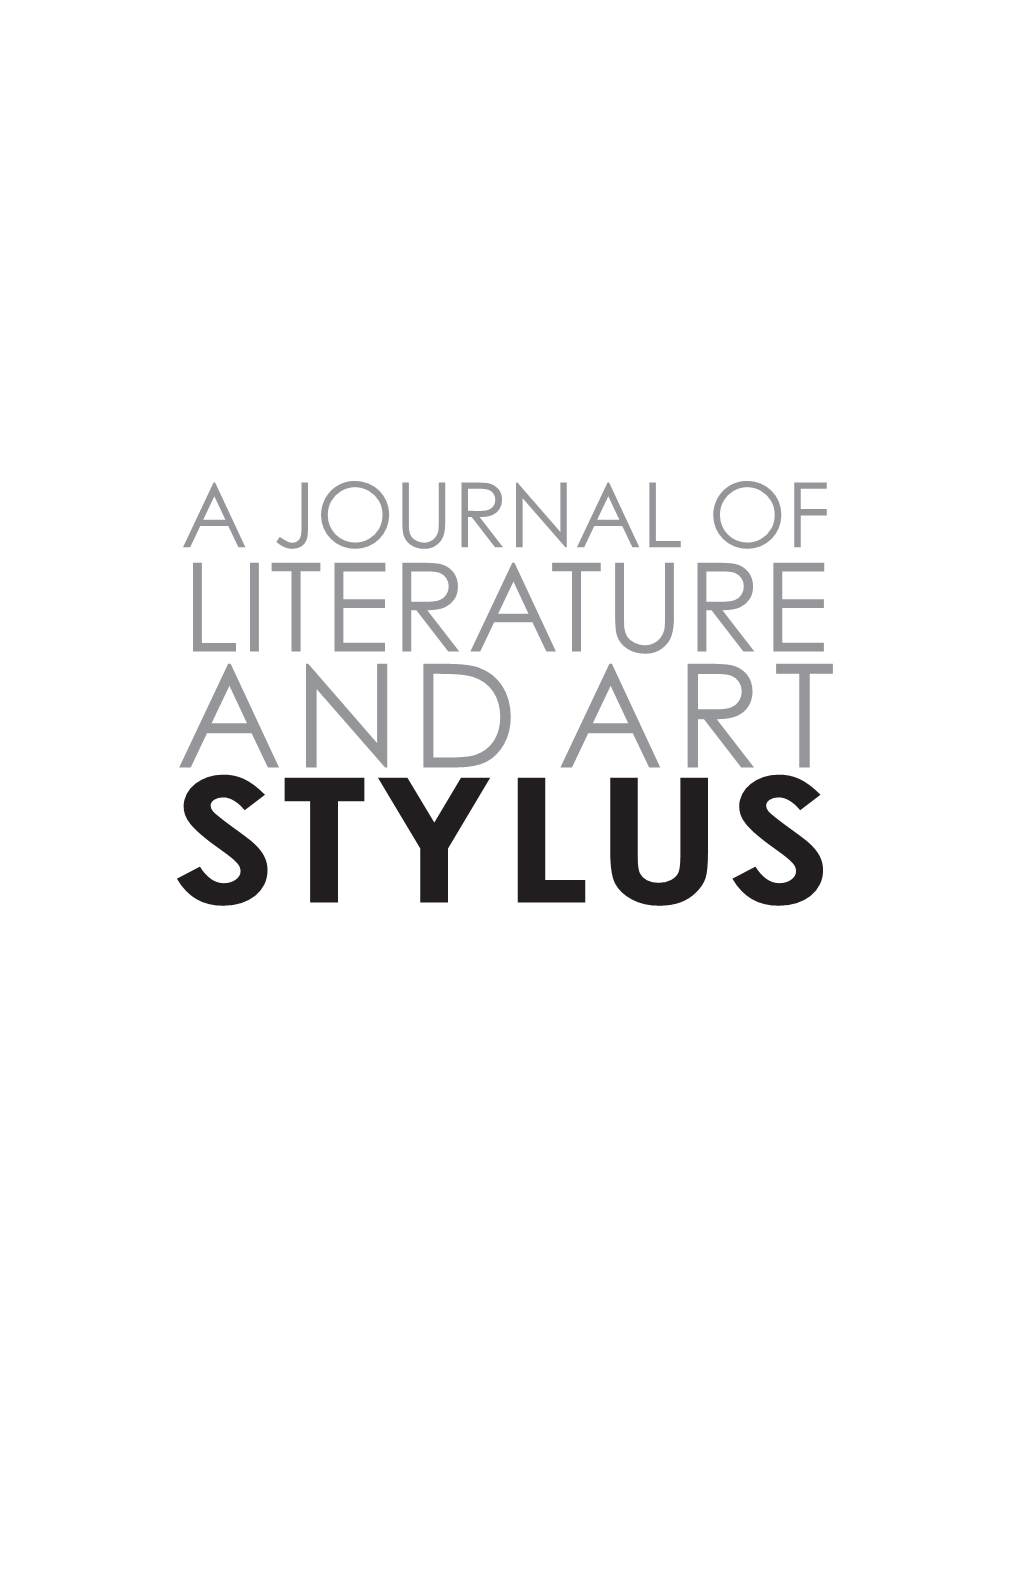 Stylus and the Jiménez- Porter Writers’ House